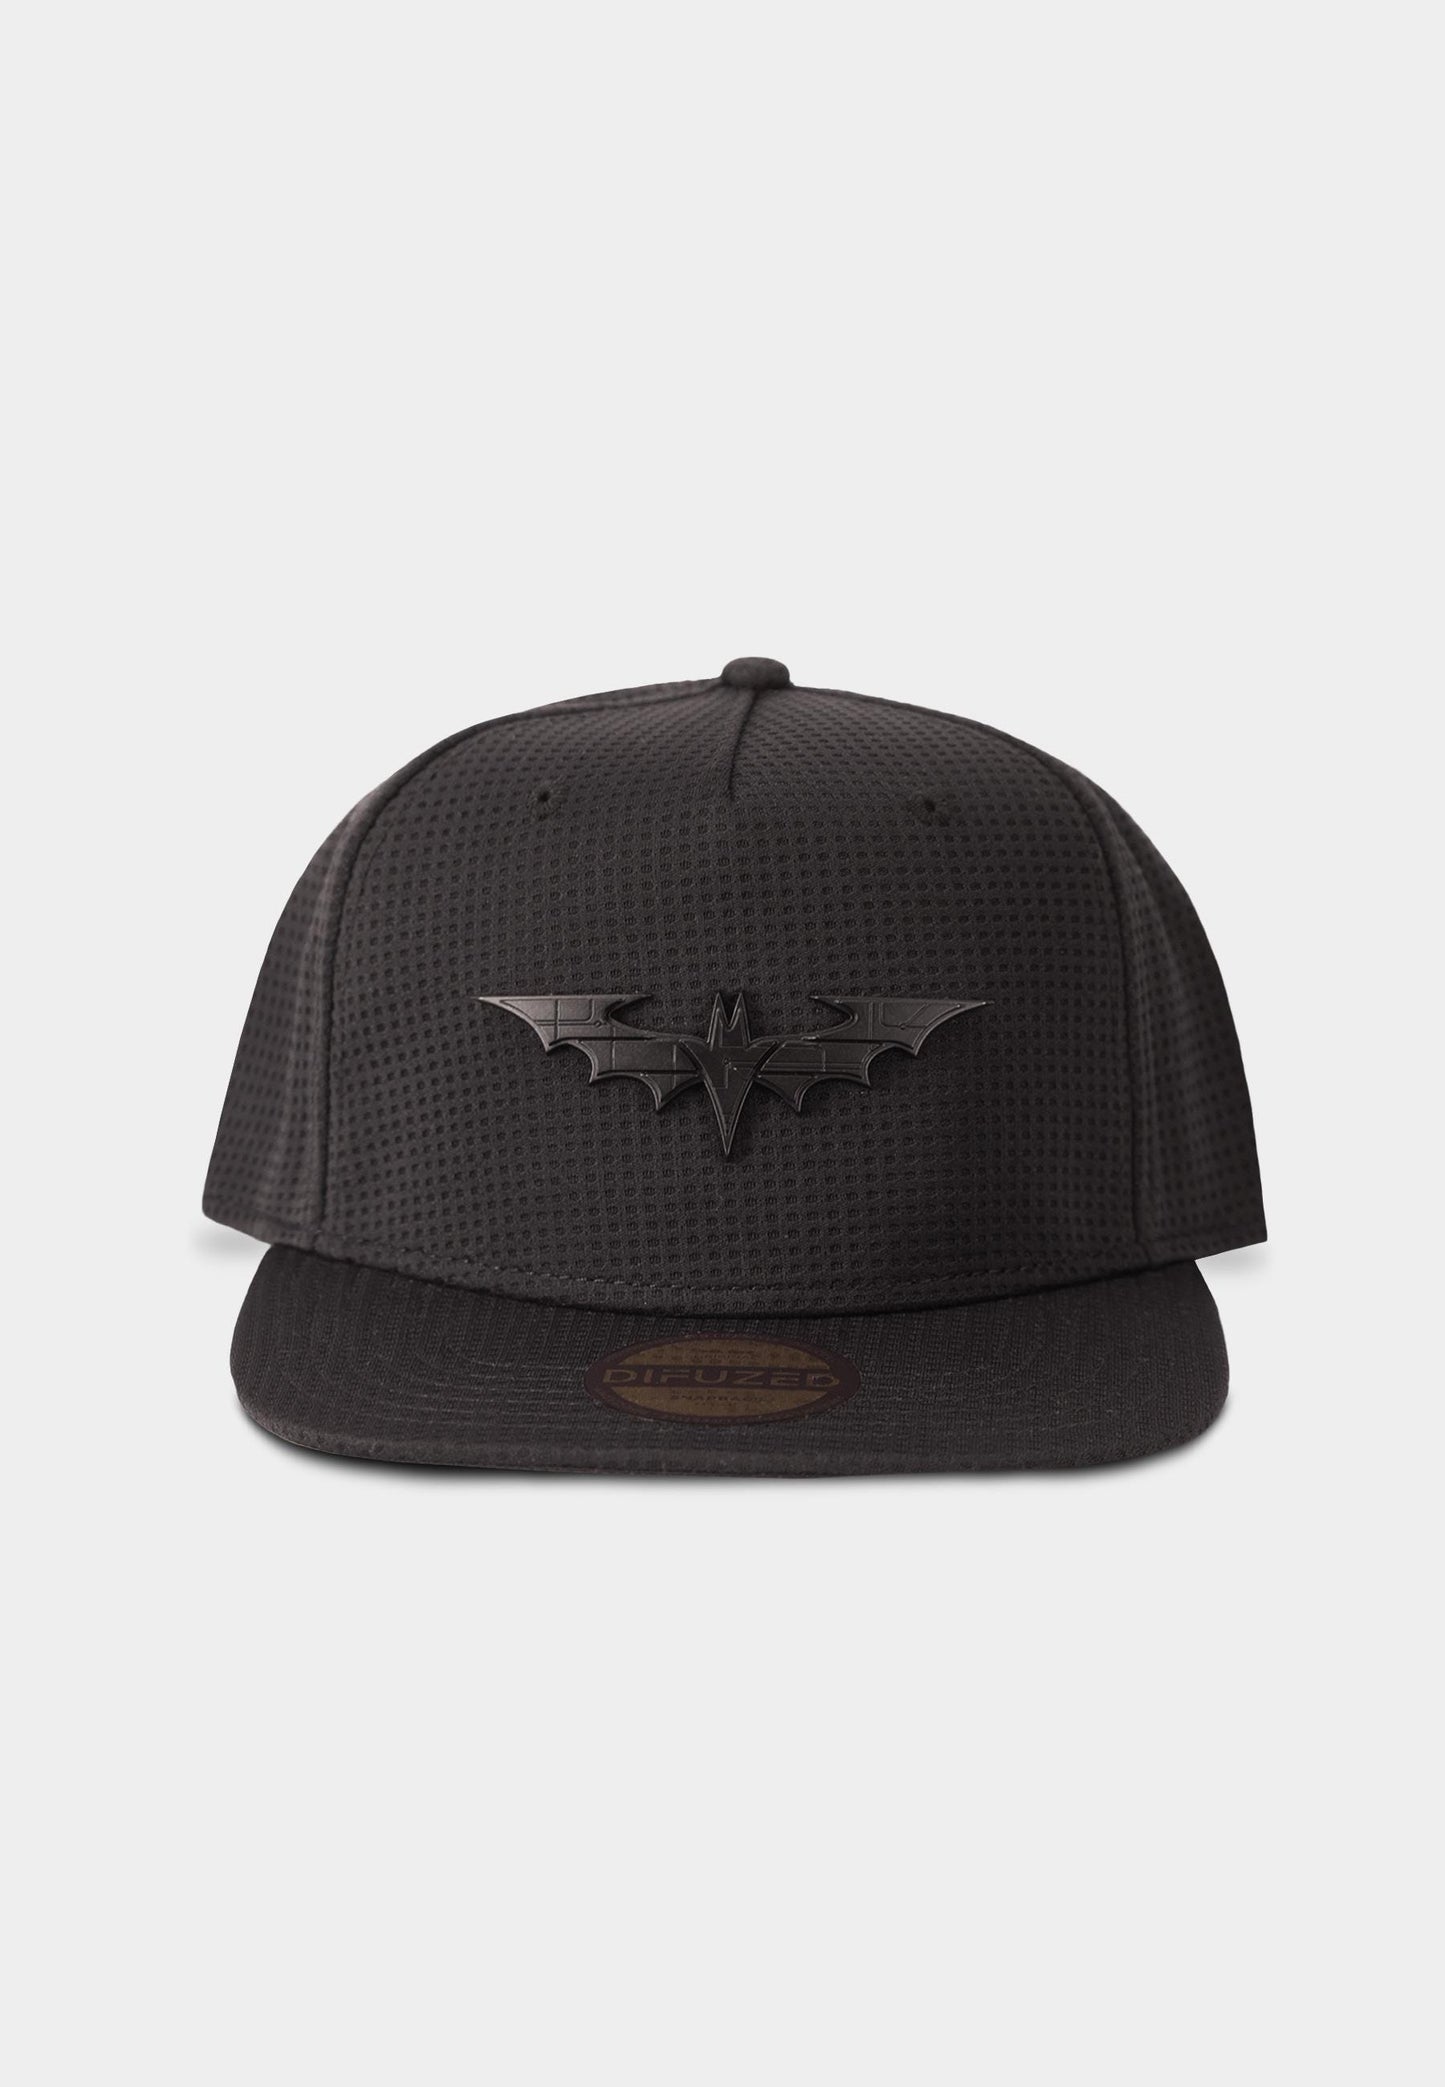 Warner - Batman Novelty Cap